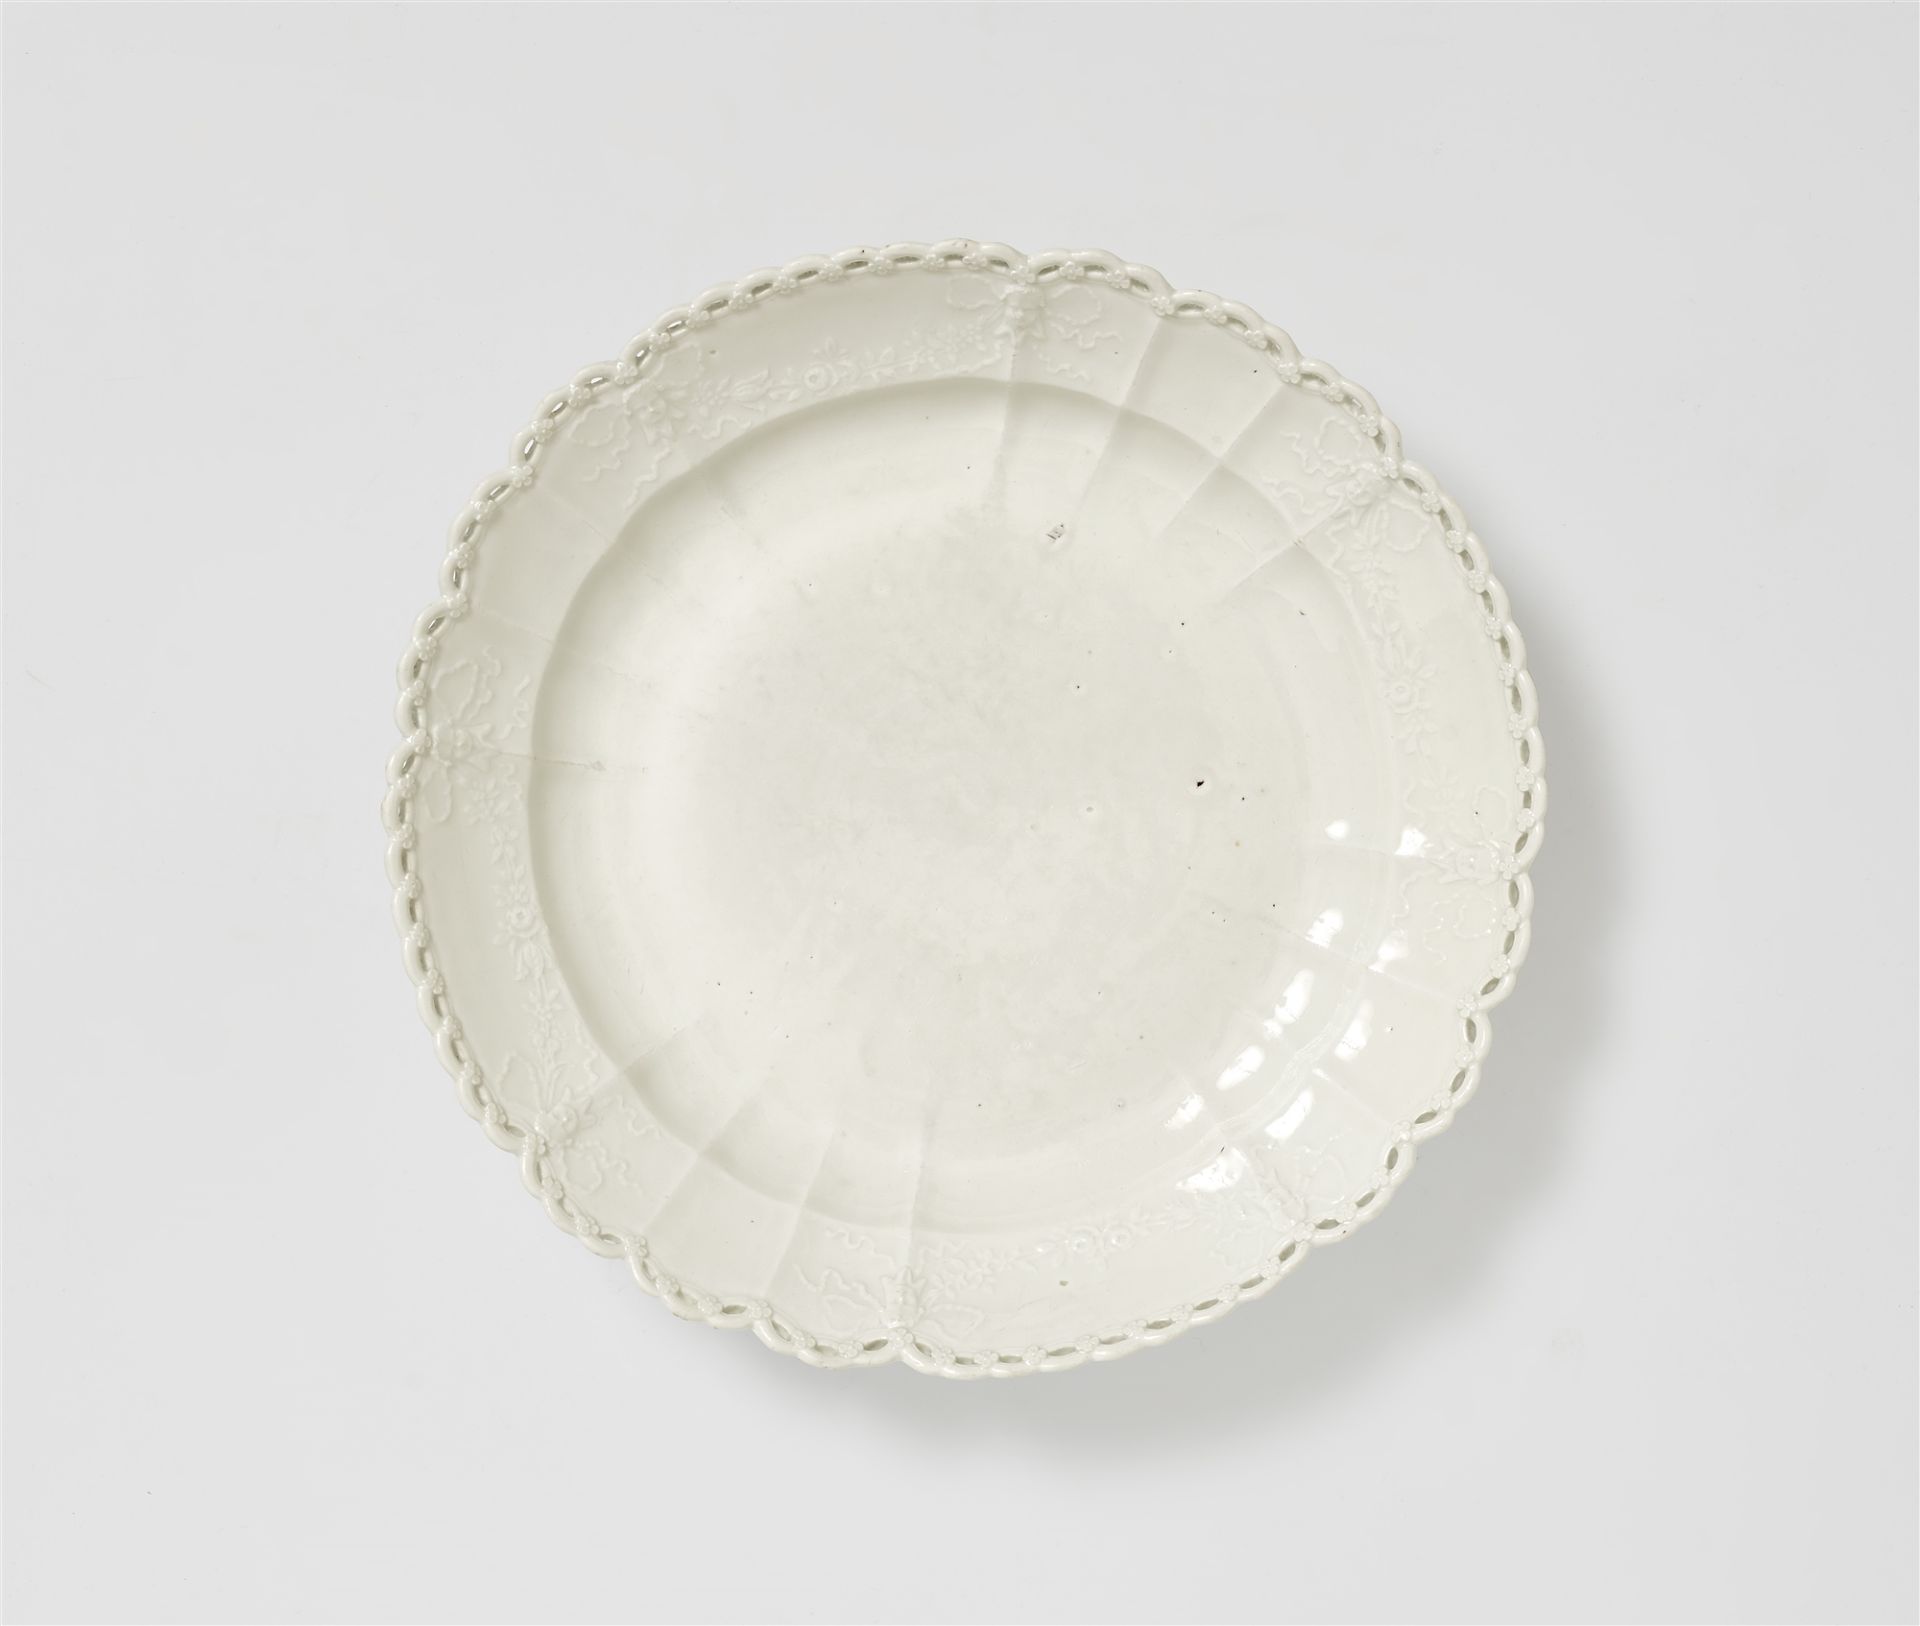 A round white Meissen porcelain dish from the Vestunen service for King Friedrich II